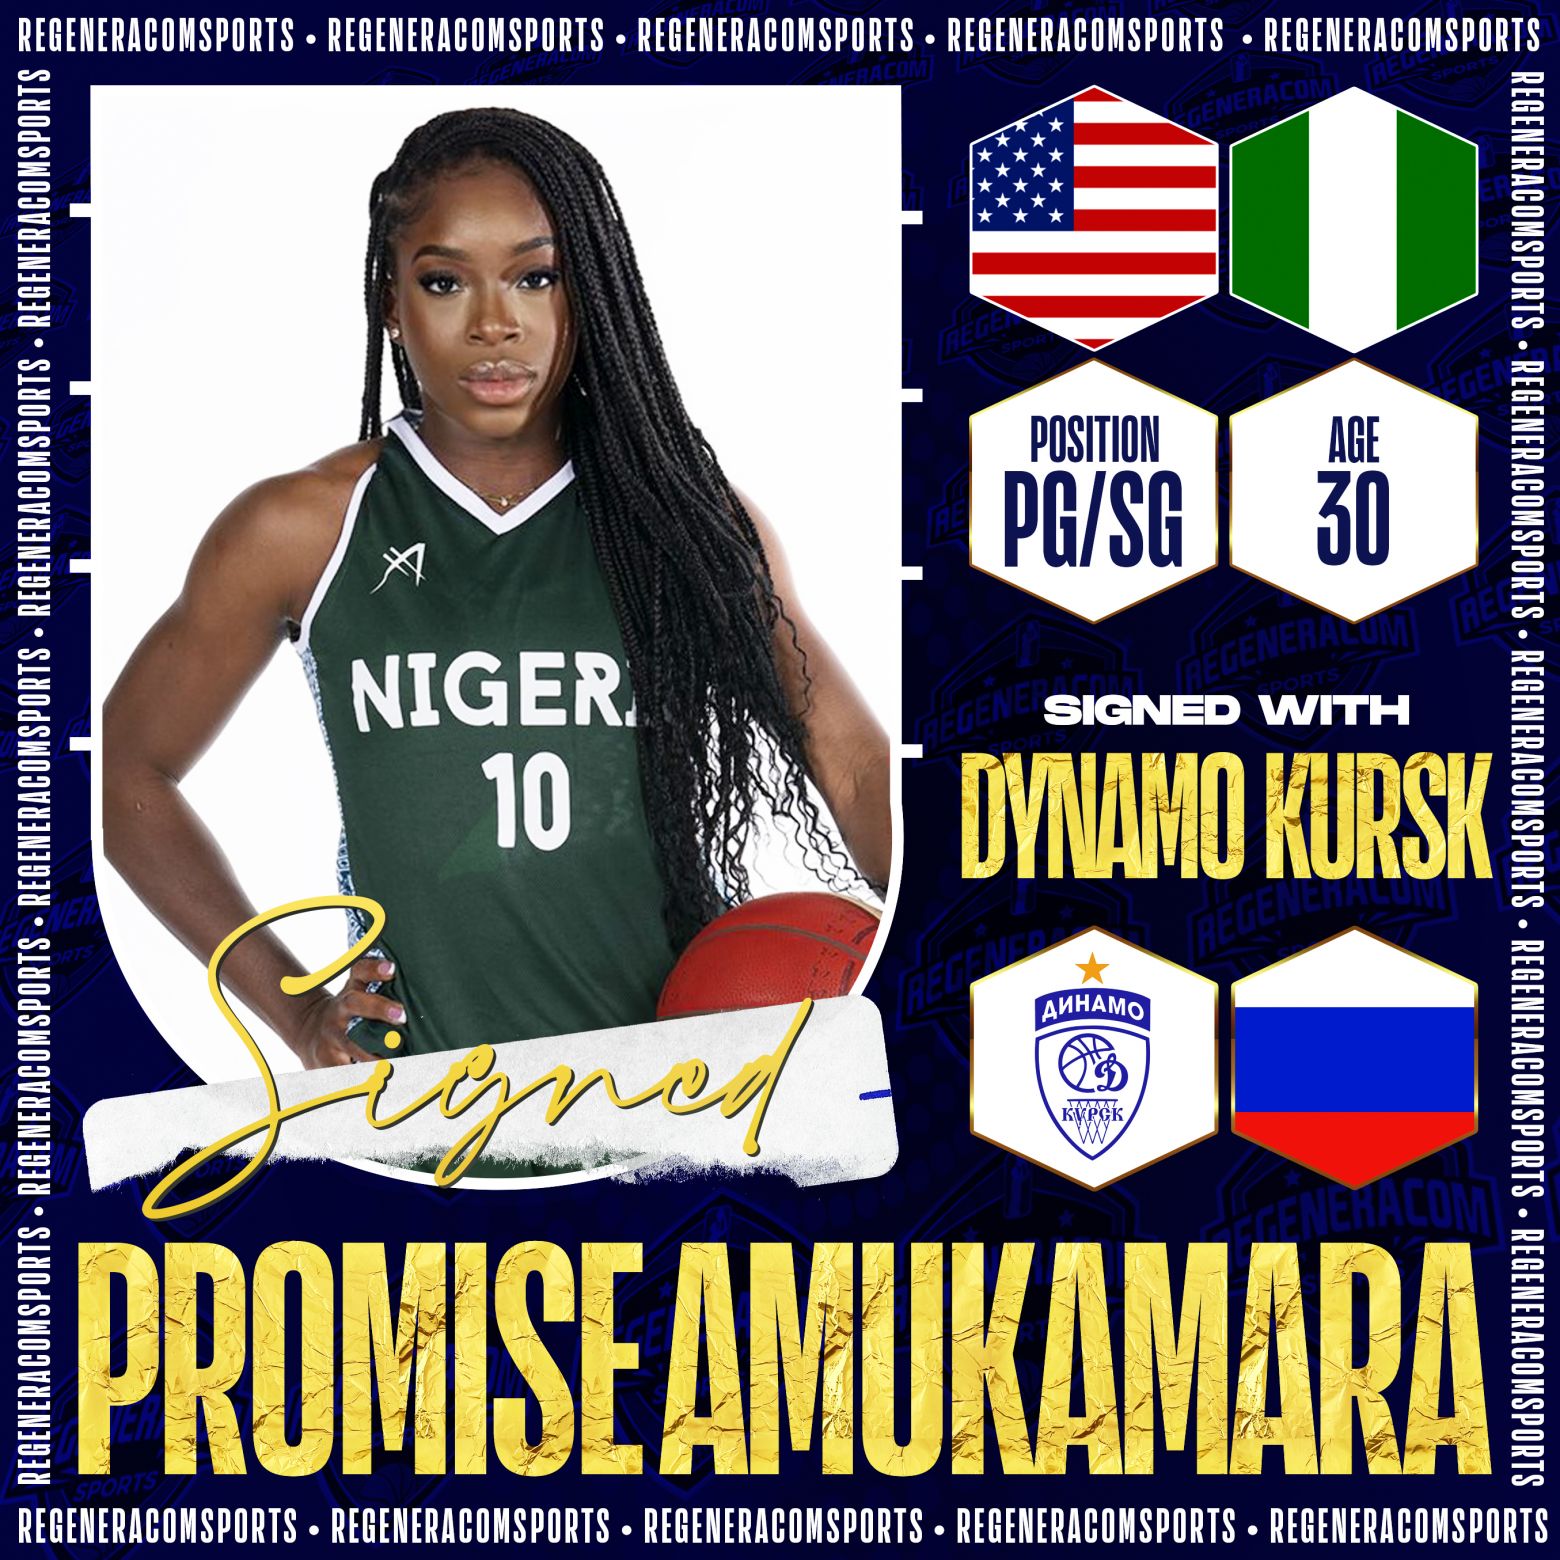 PROMISE AMUKAMARA has signed with Dynamo Kursk for the 2023/24 season